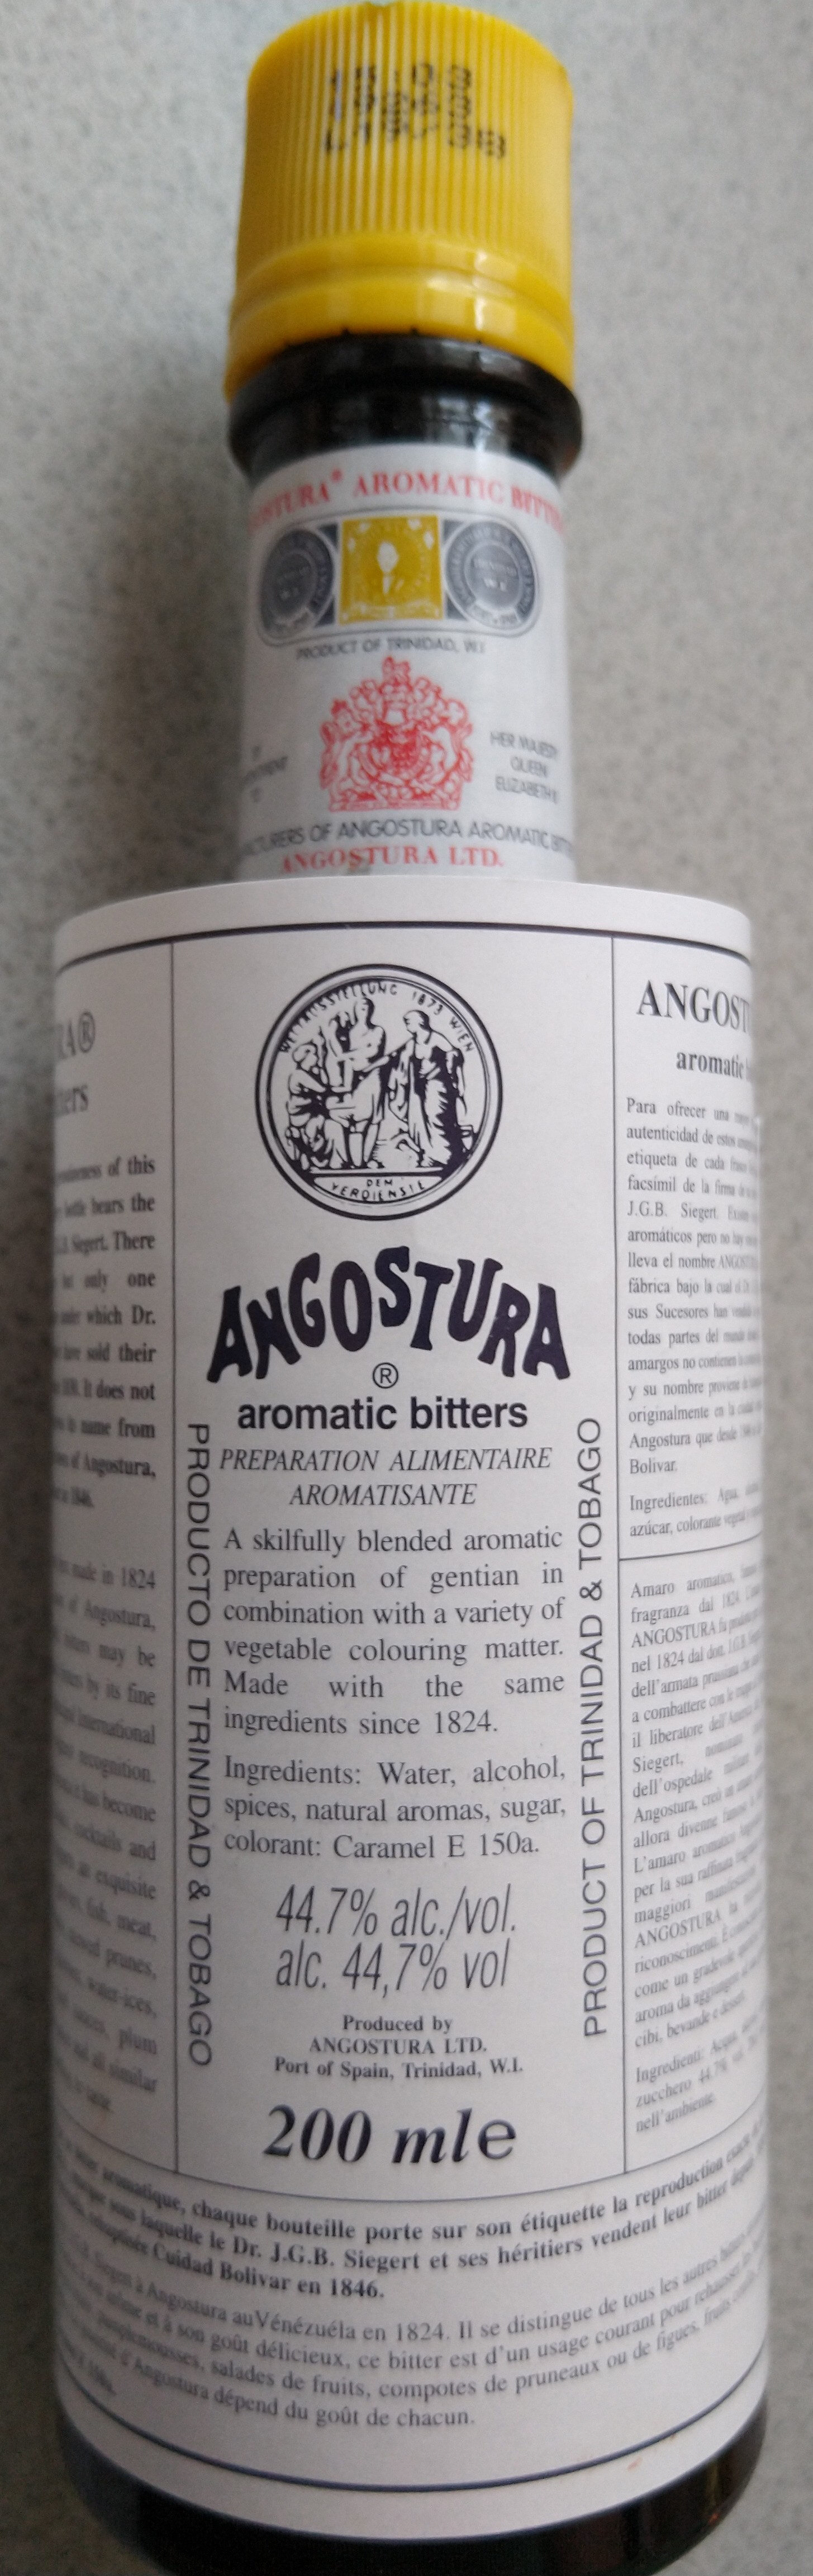 Angostura  - aromatic bitters - Product - en